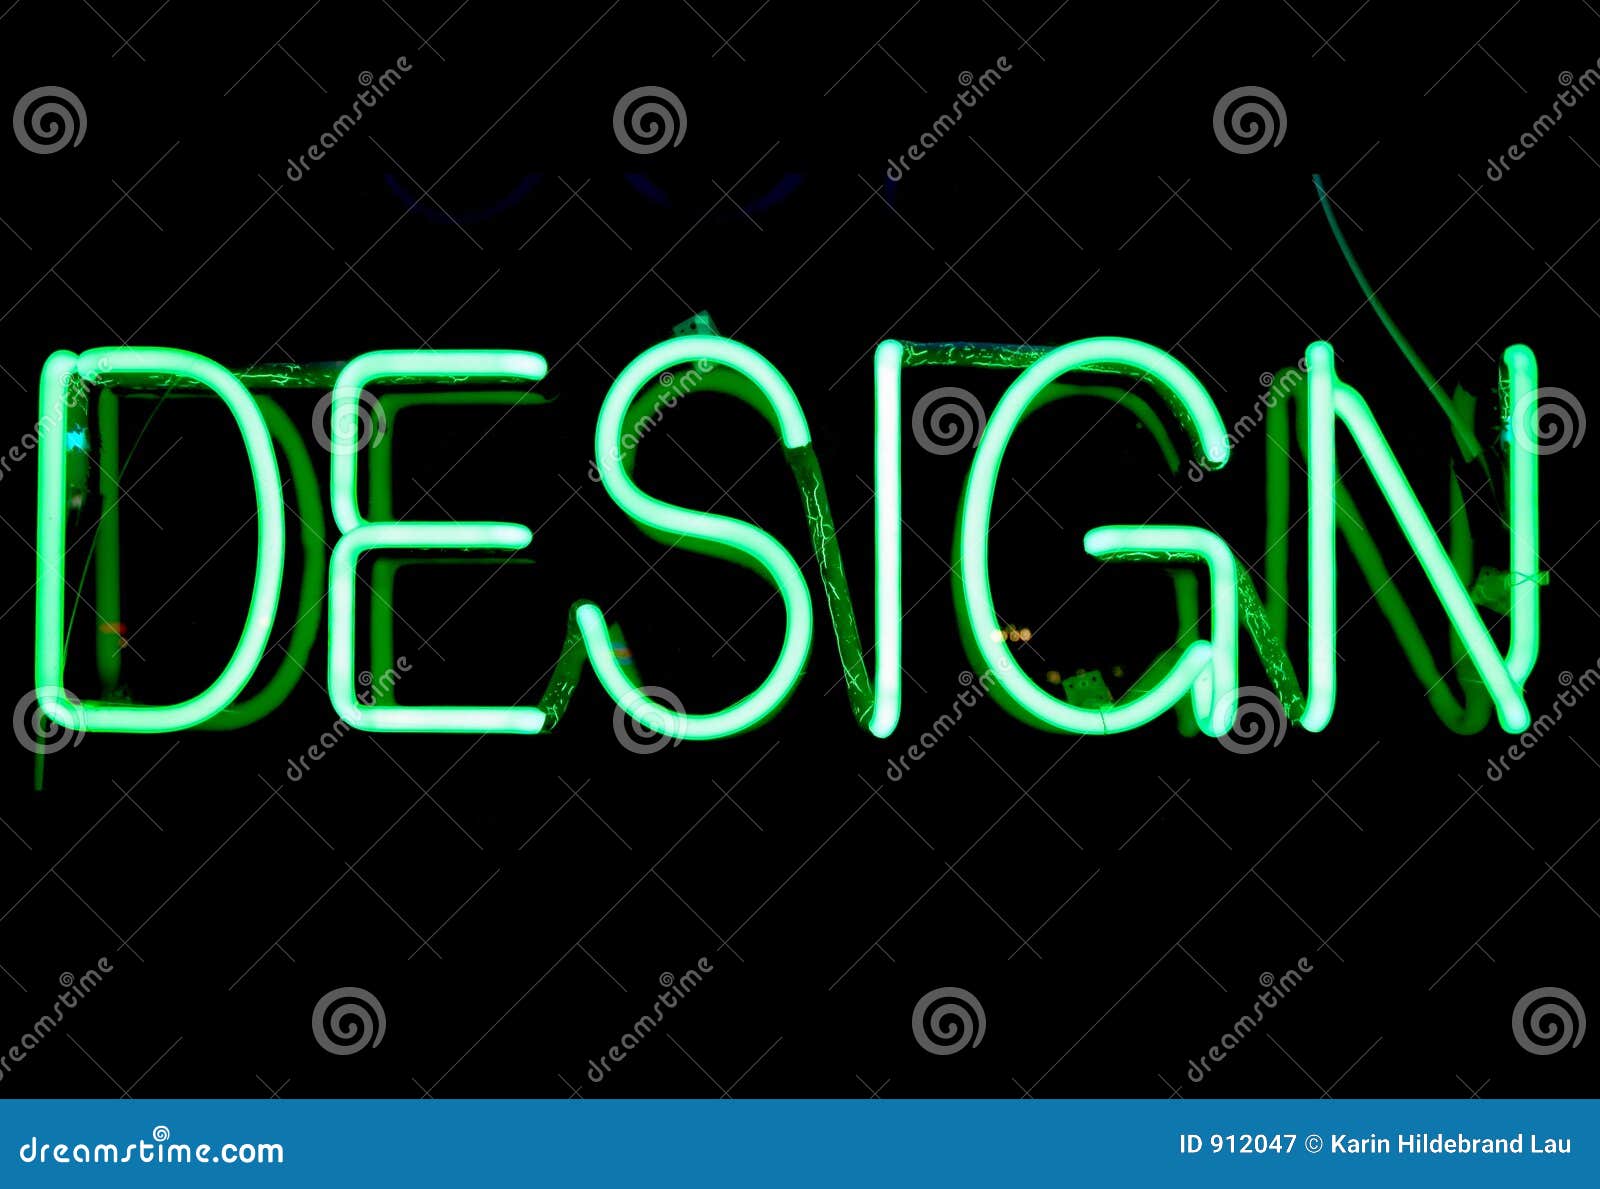 Design Neon stock image. Image create, material - 912047